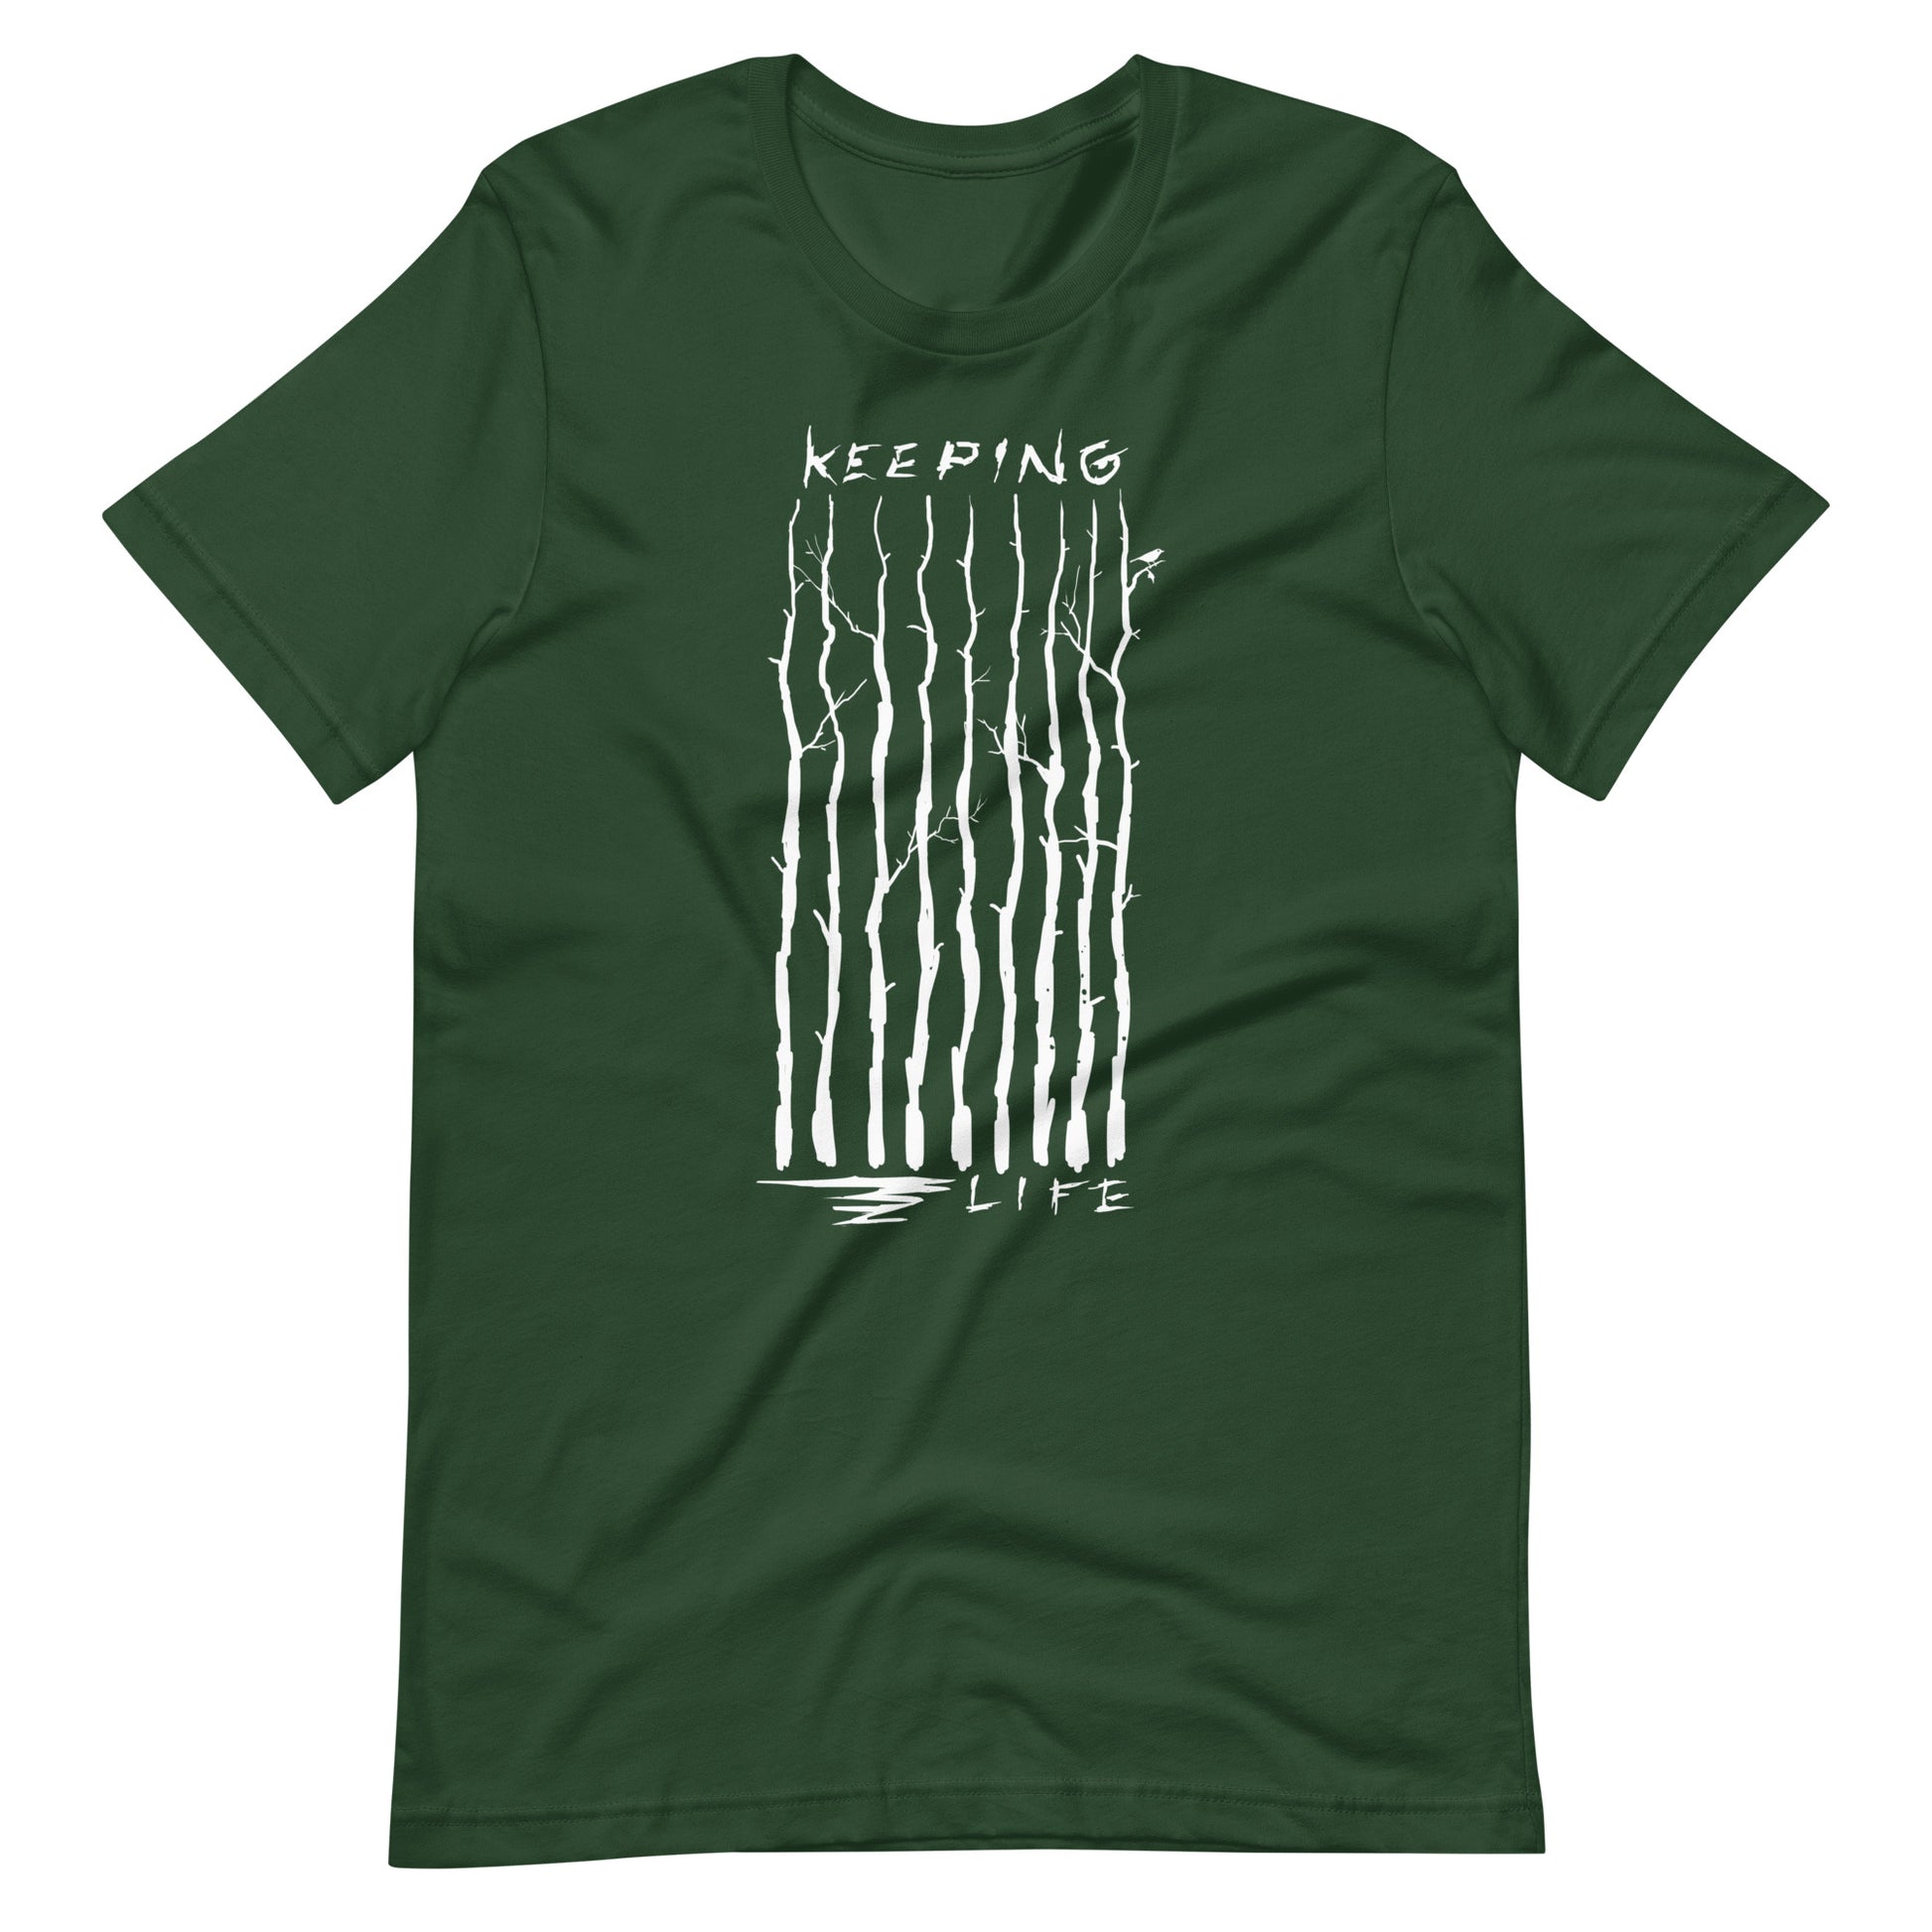 Keeping Lift - Men's t-shirt - Forest Front